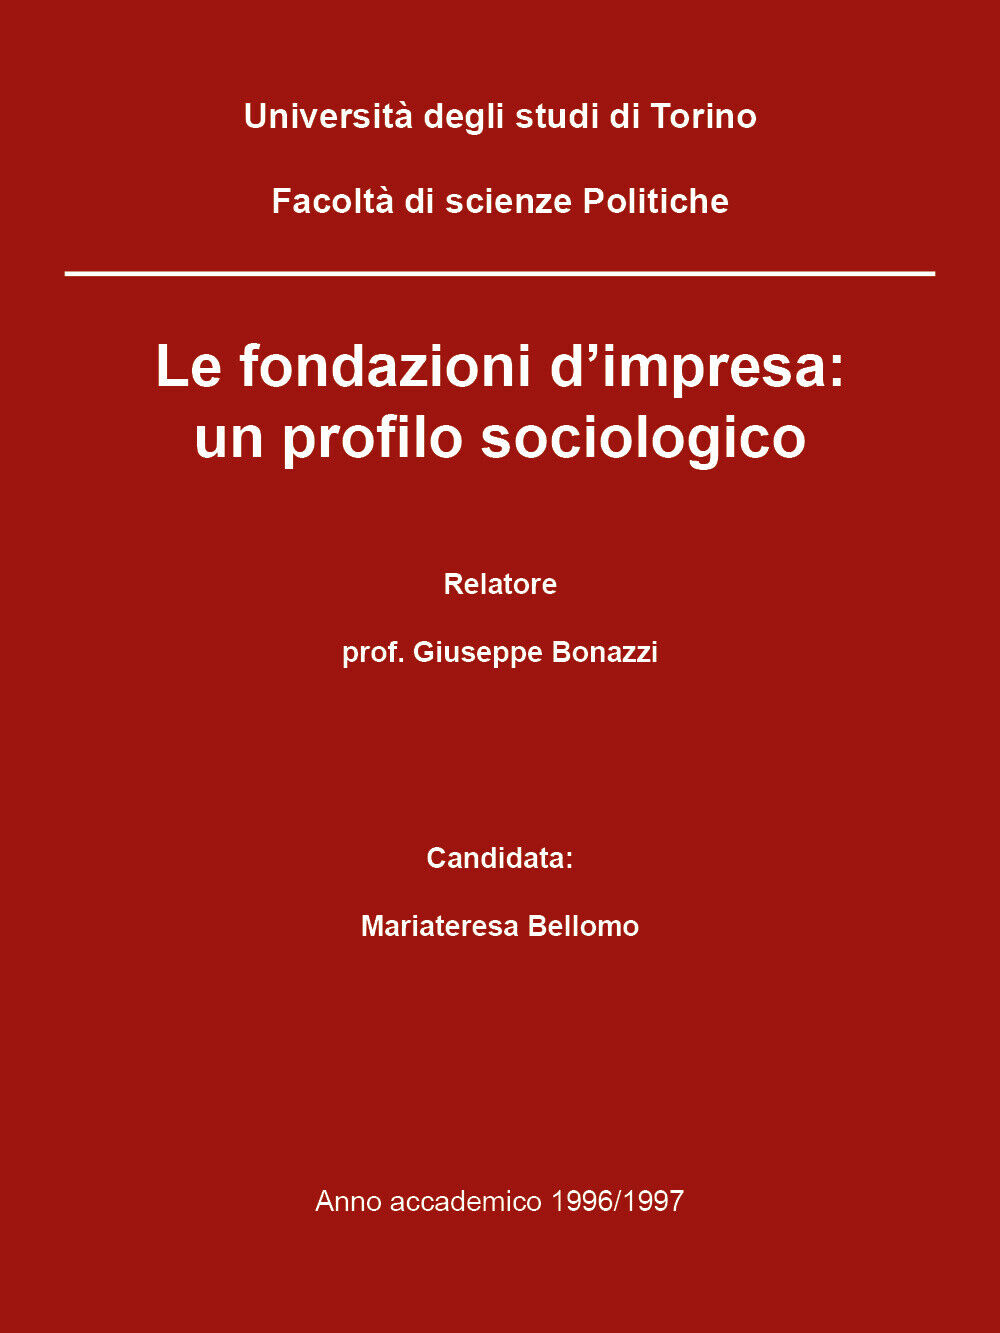 Le fondazioni d'impresa: un profilo sociologico - Mariateresa Bellomo,  2018,  Y